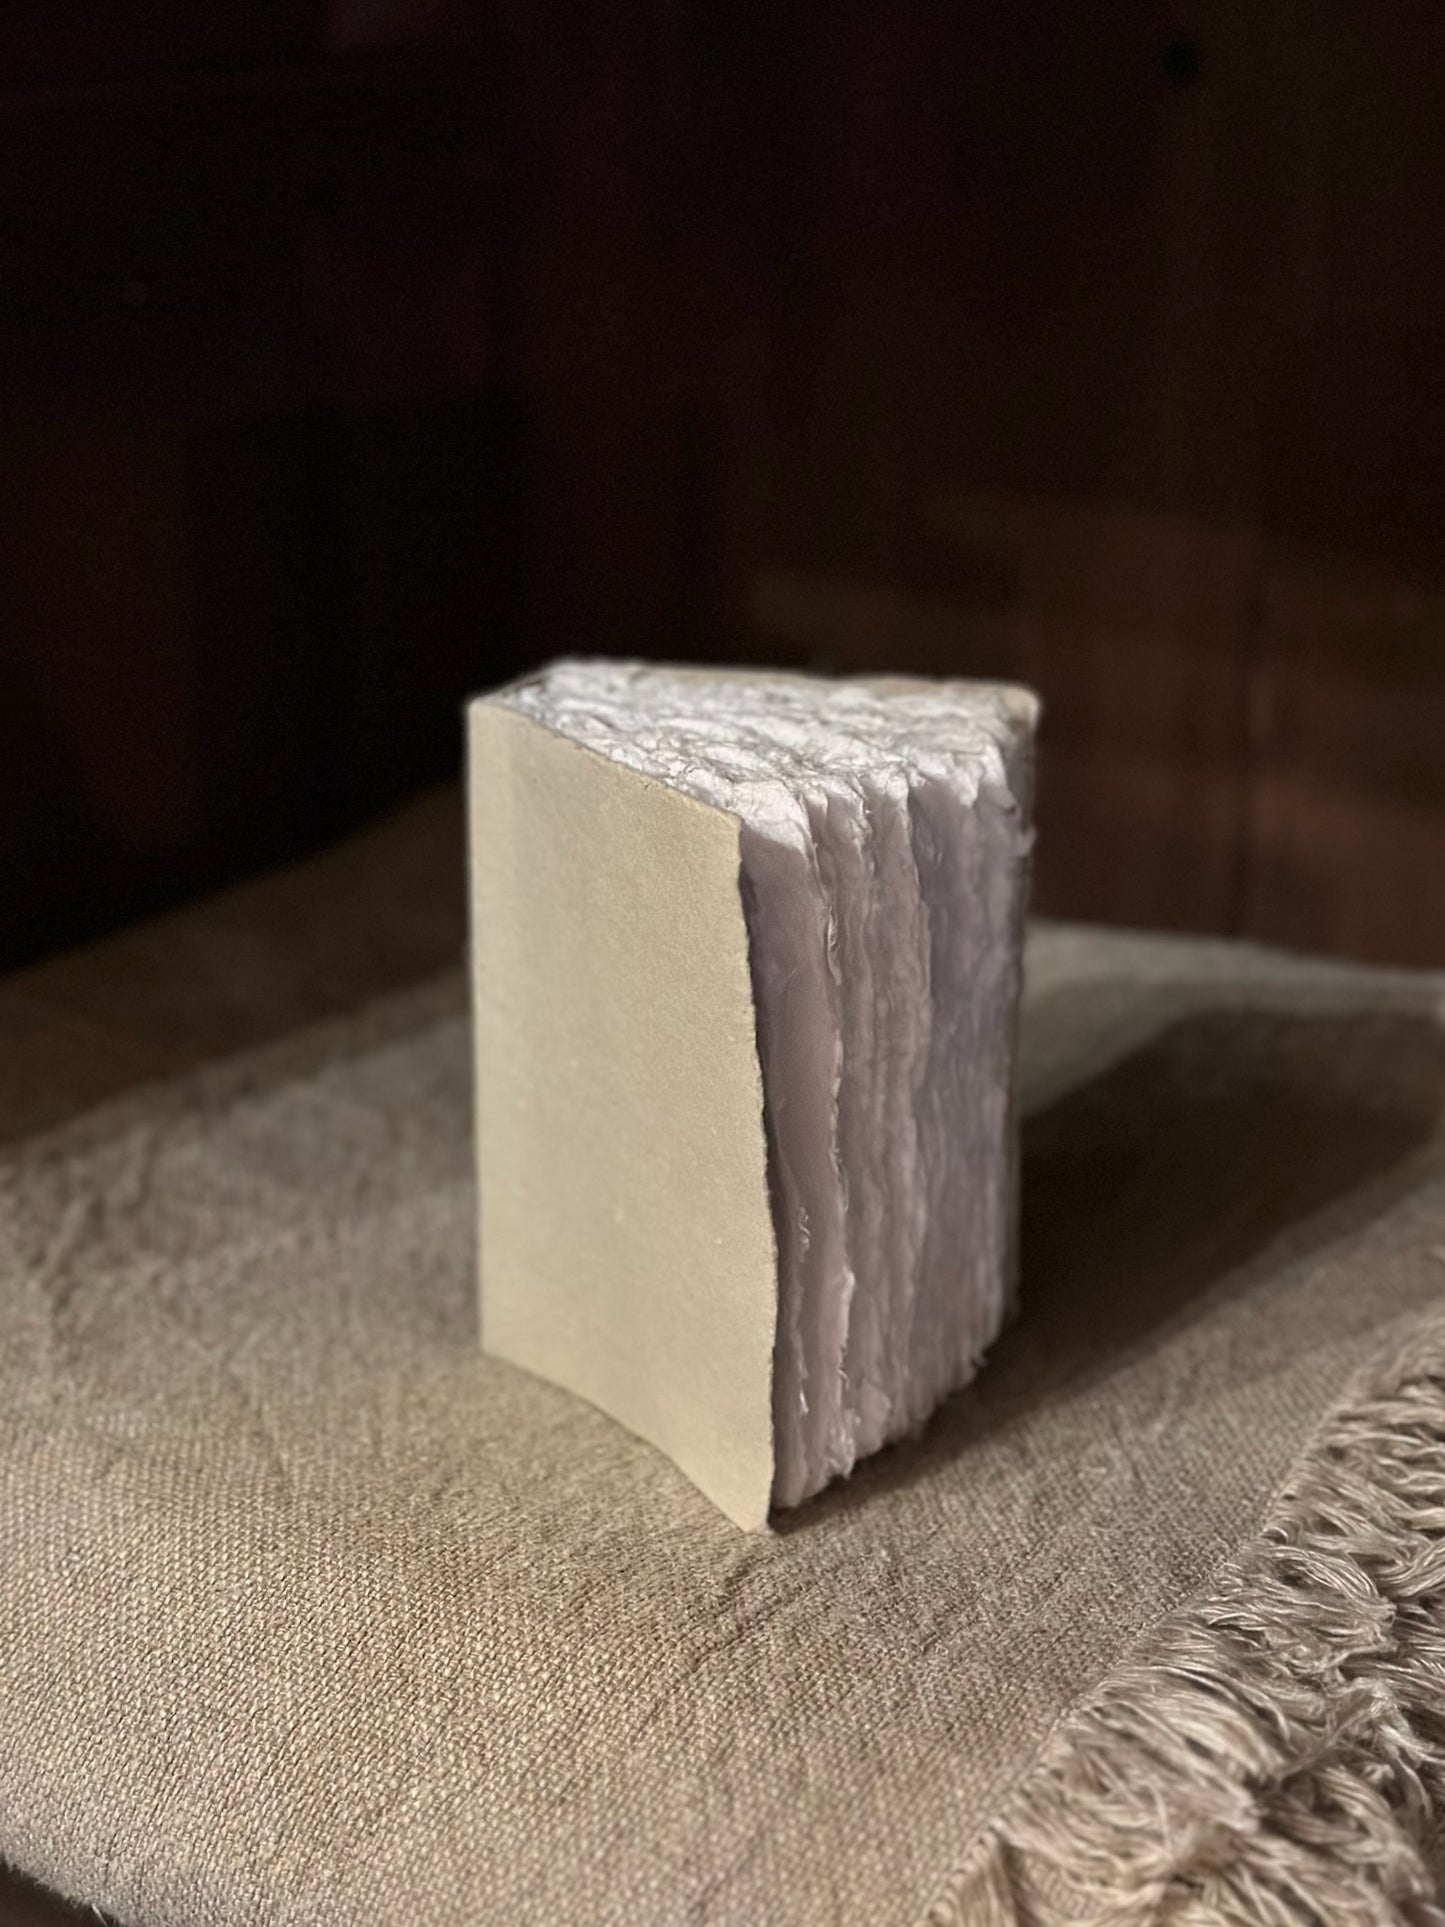 Small Handmade Book - Beige